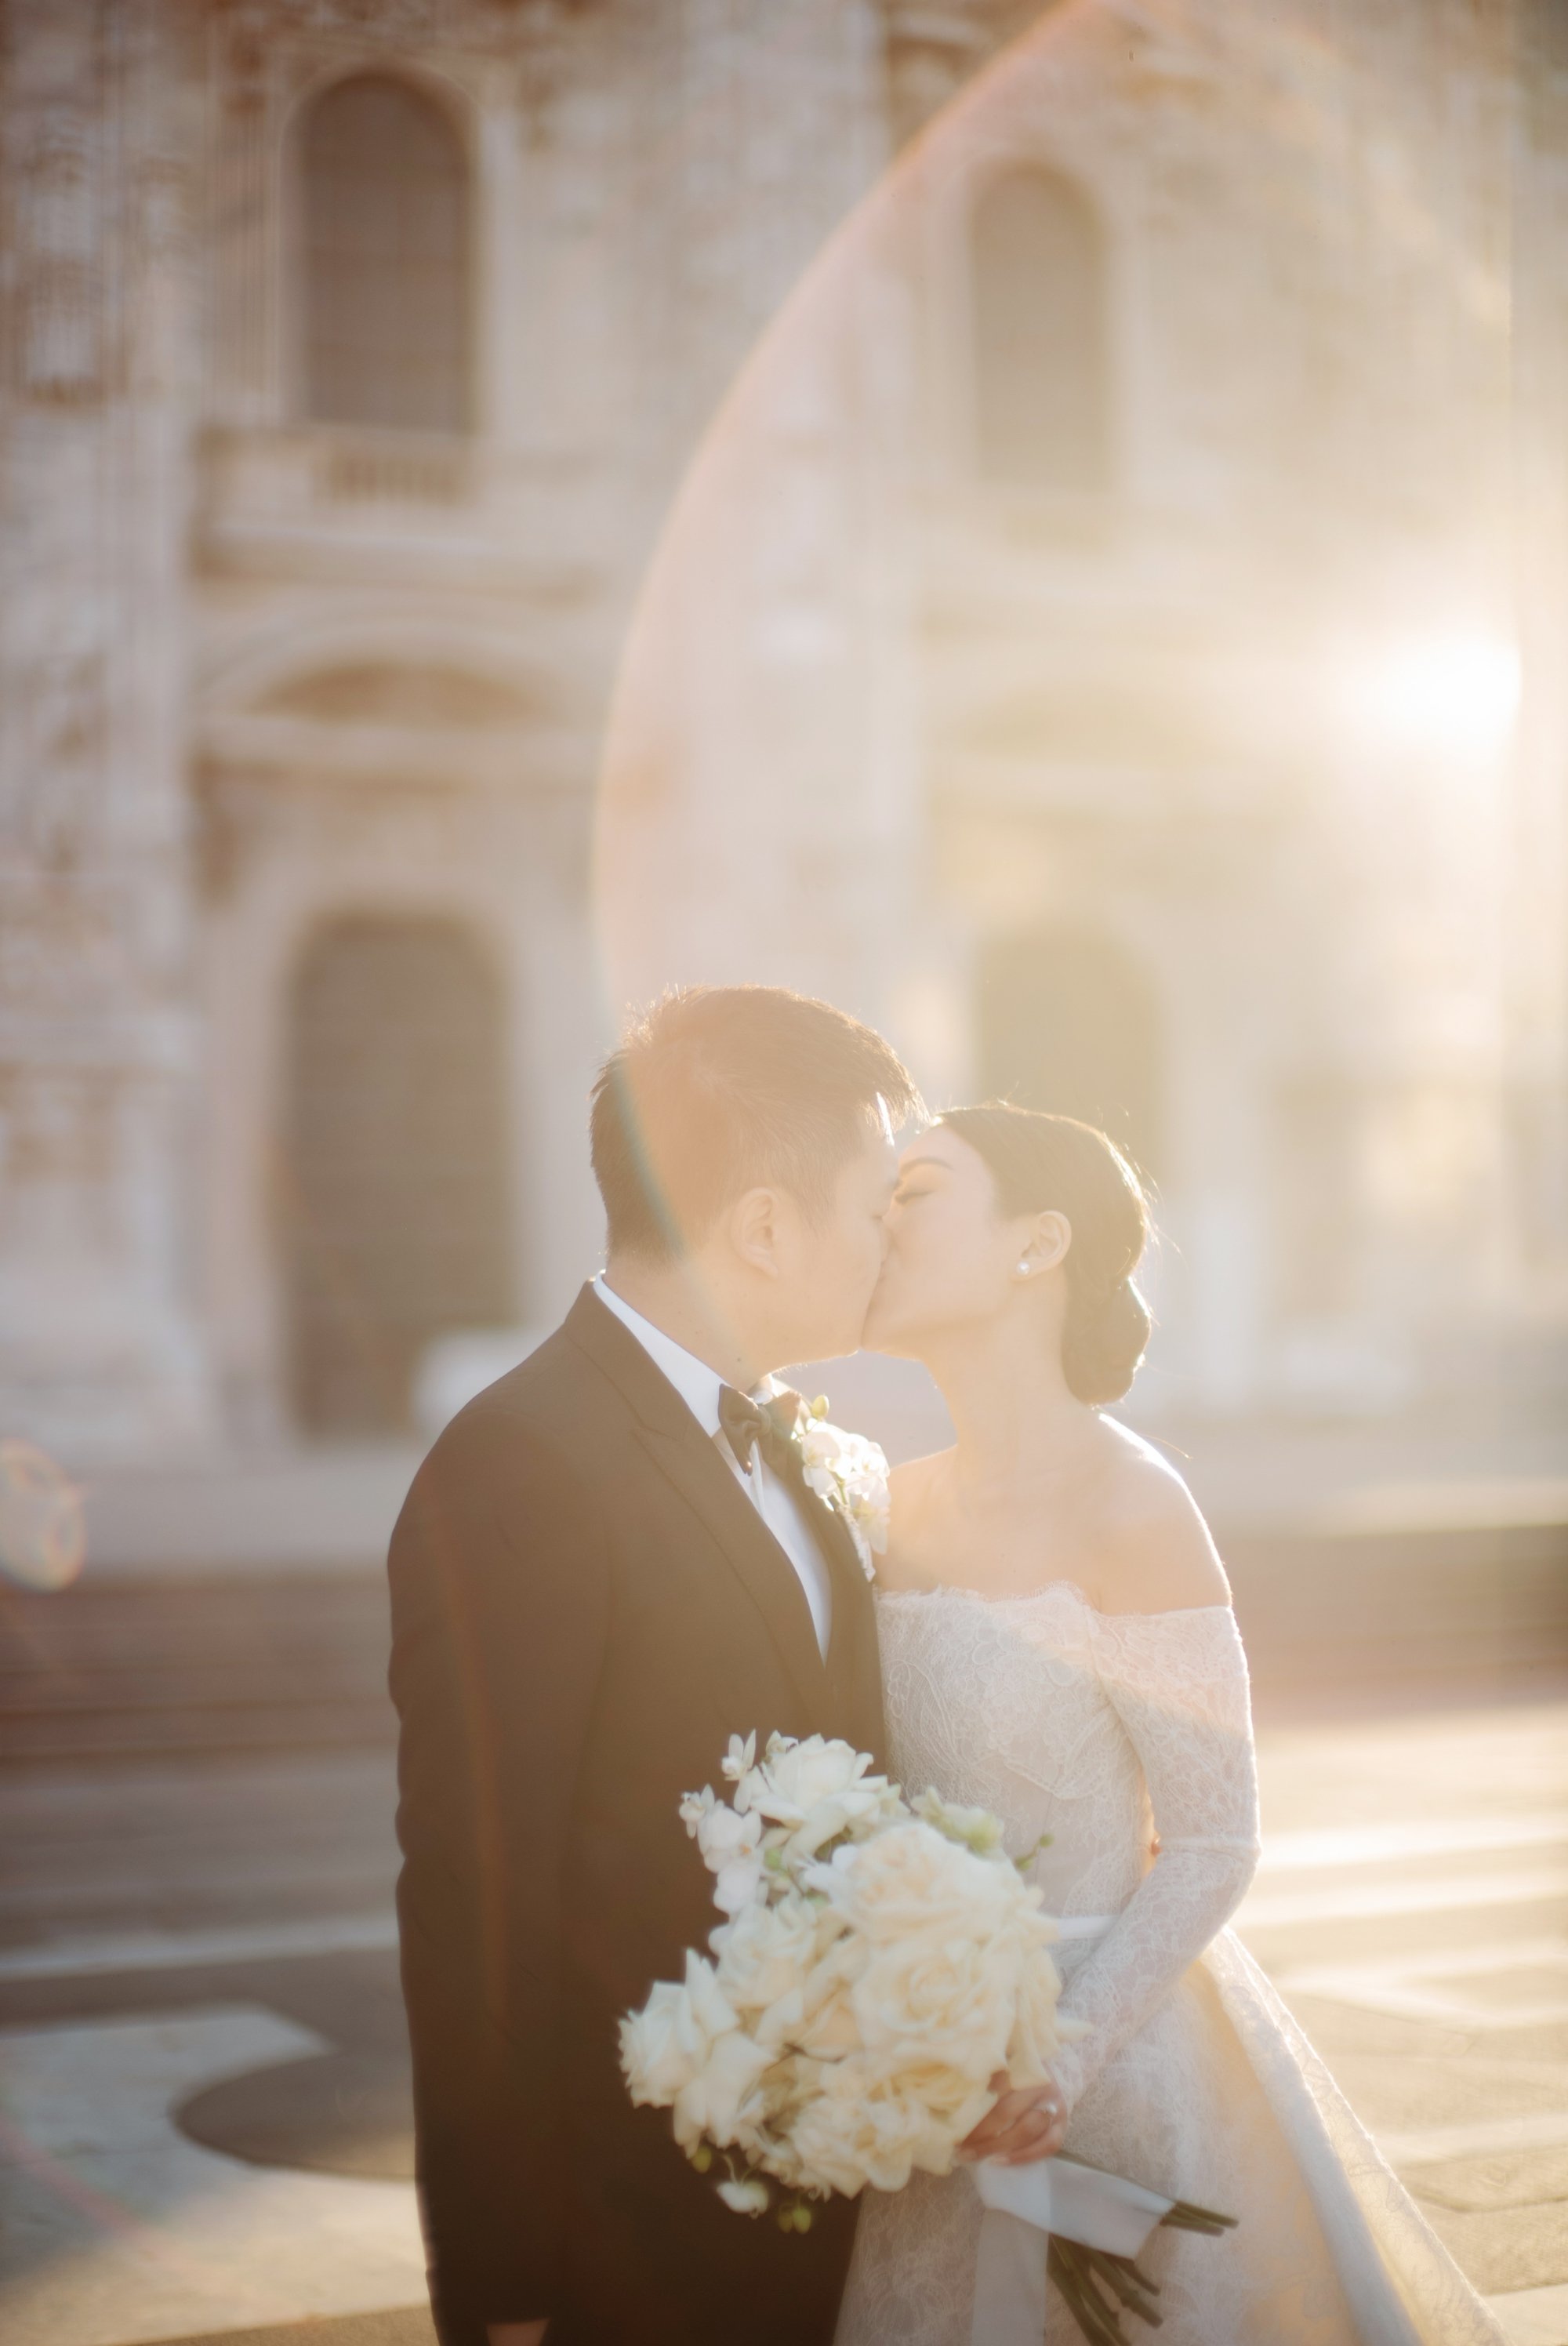 Prawira-Evelyn-Dolomites-Italy-Santre wedding-Yefta Gunawan-Jeriko MUA-Carol Kuntjoro Photography-24.jpg